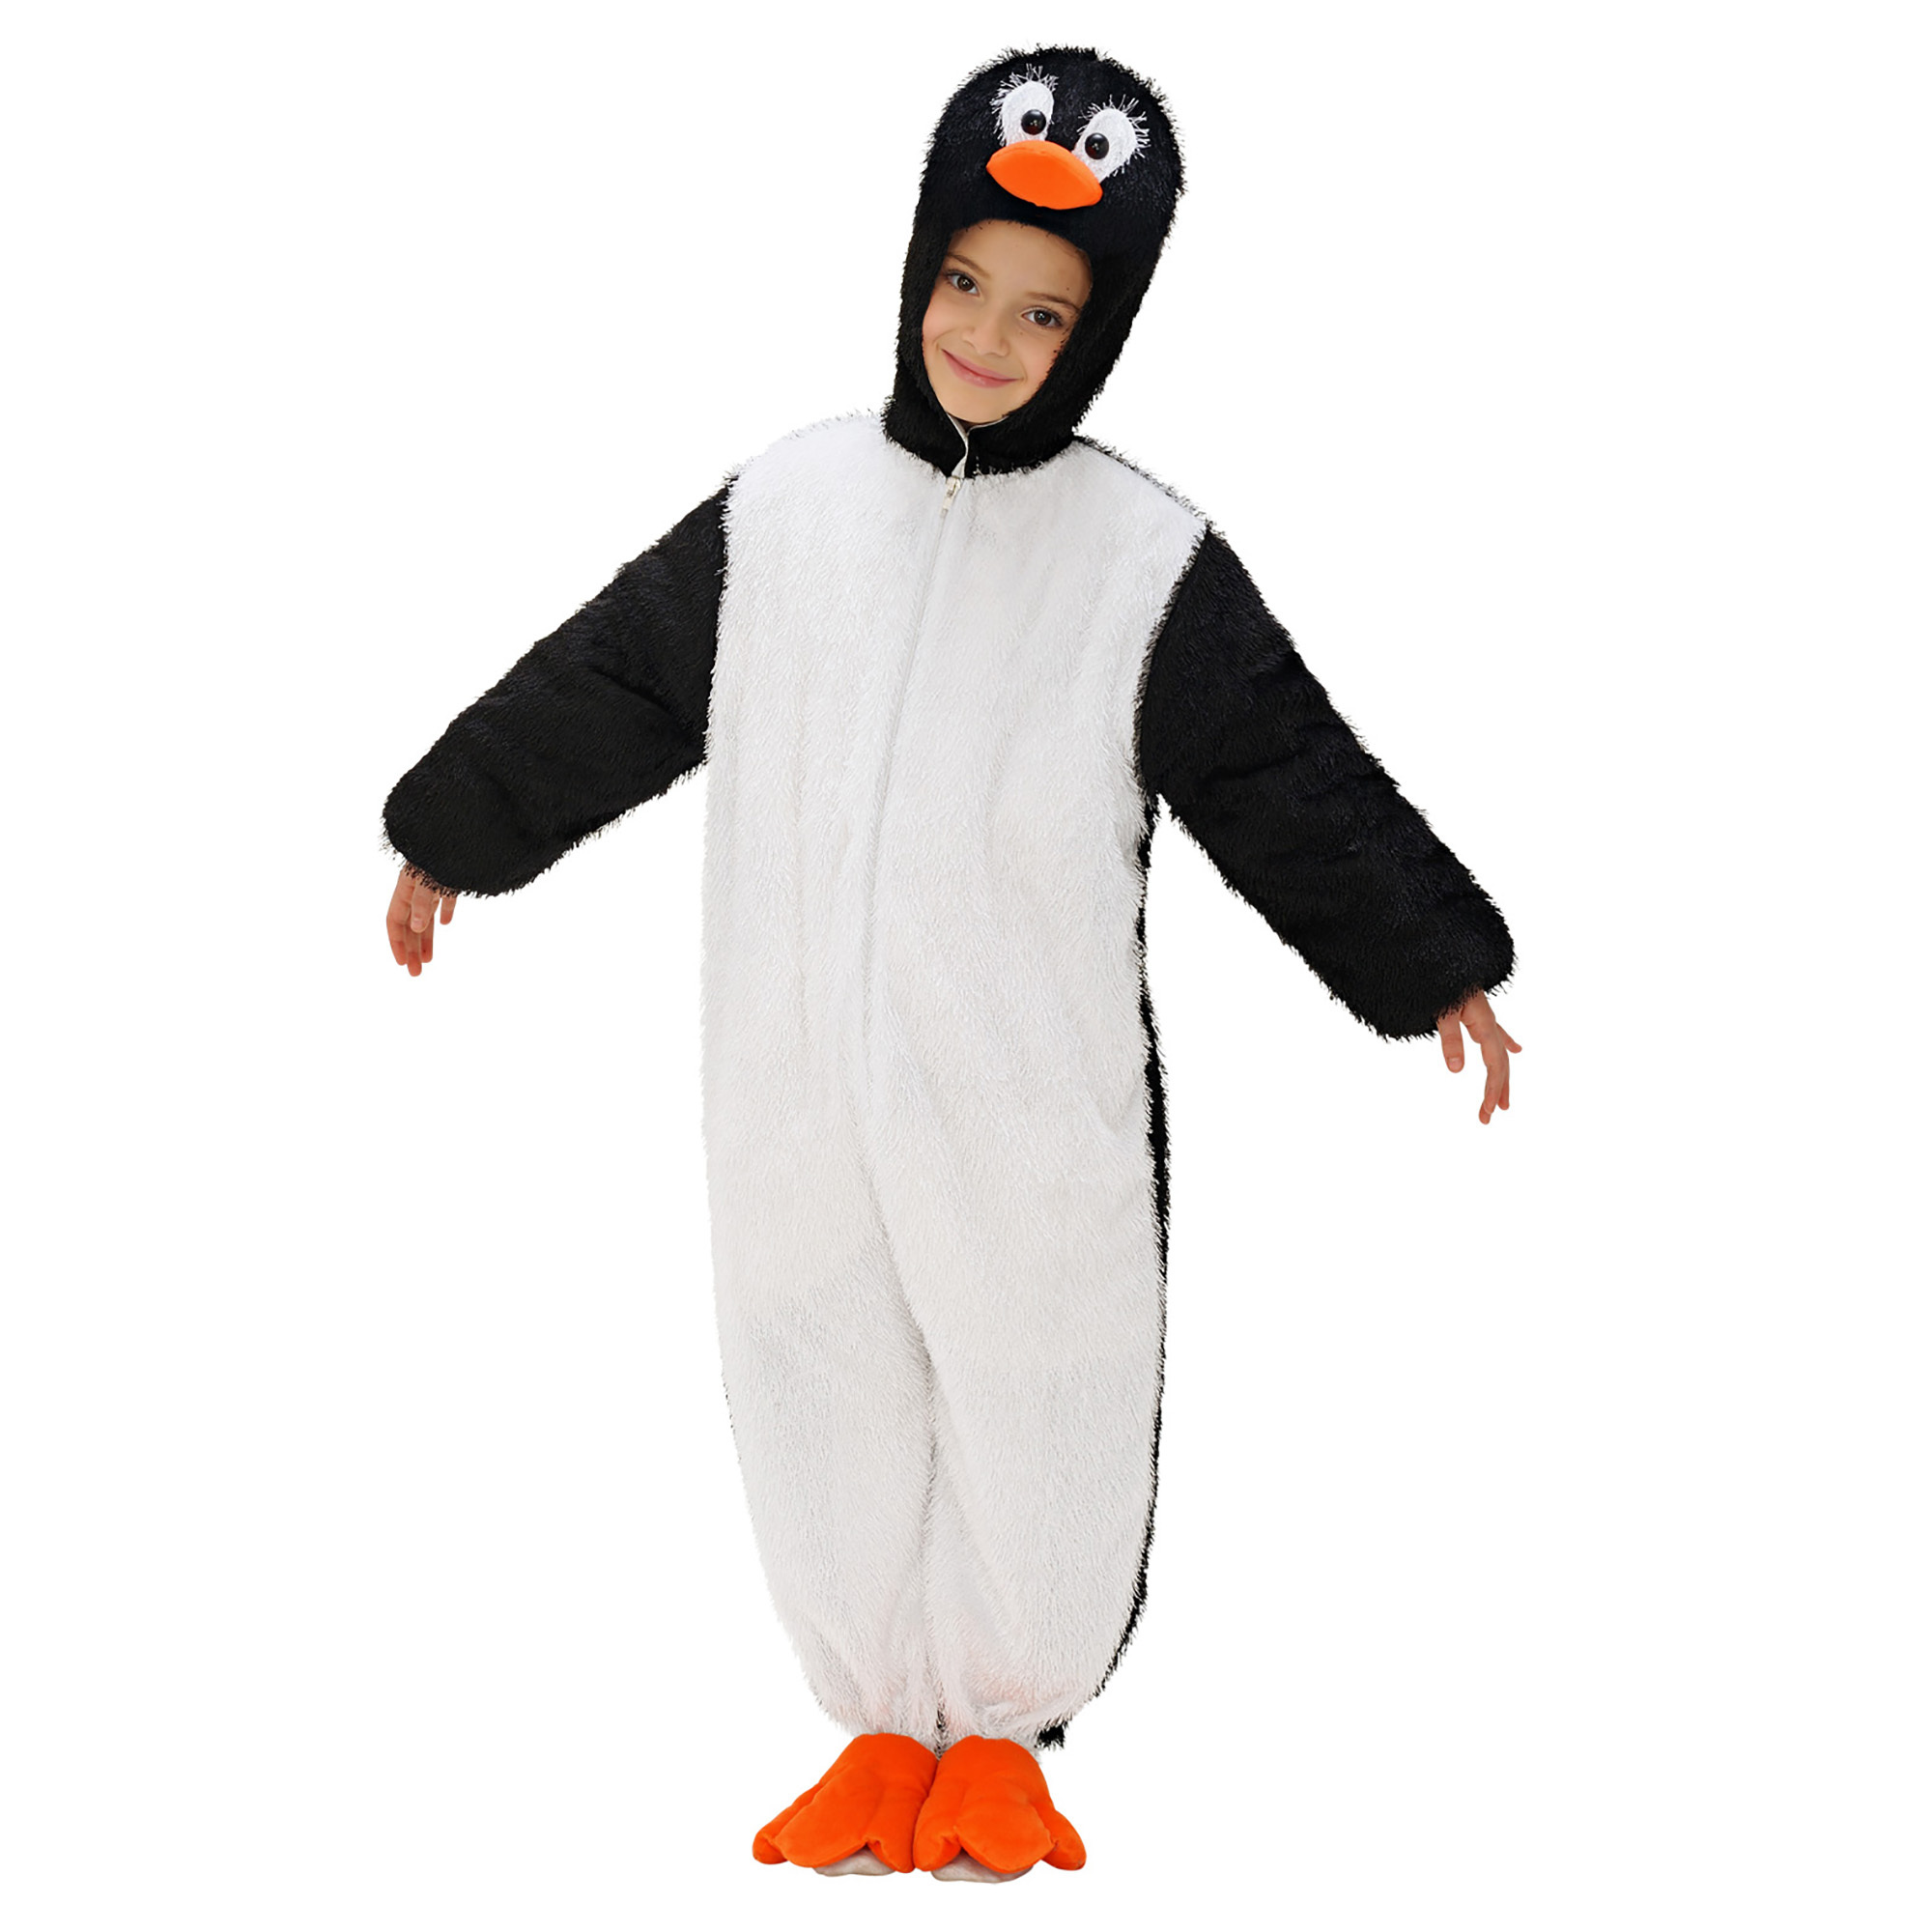 Plushe pinguin kostuum kind